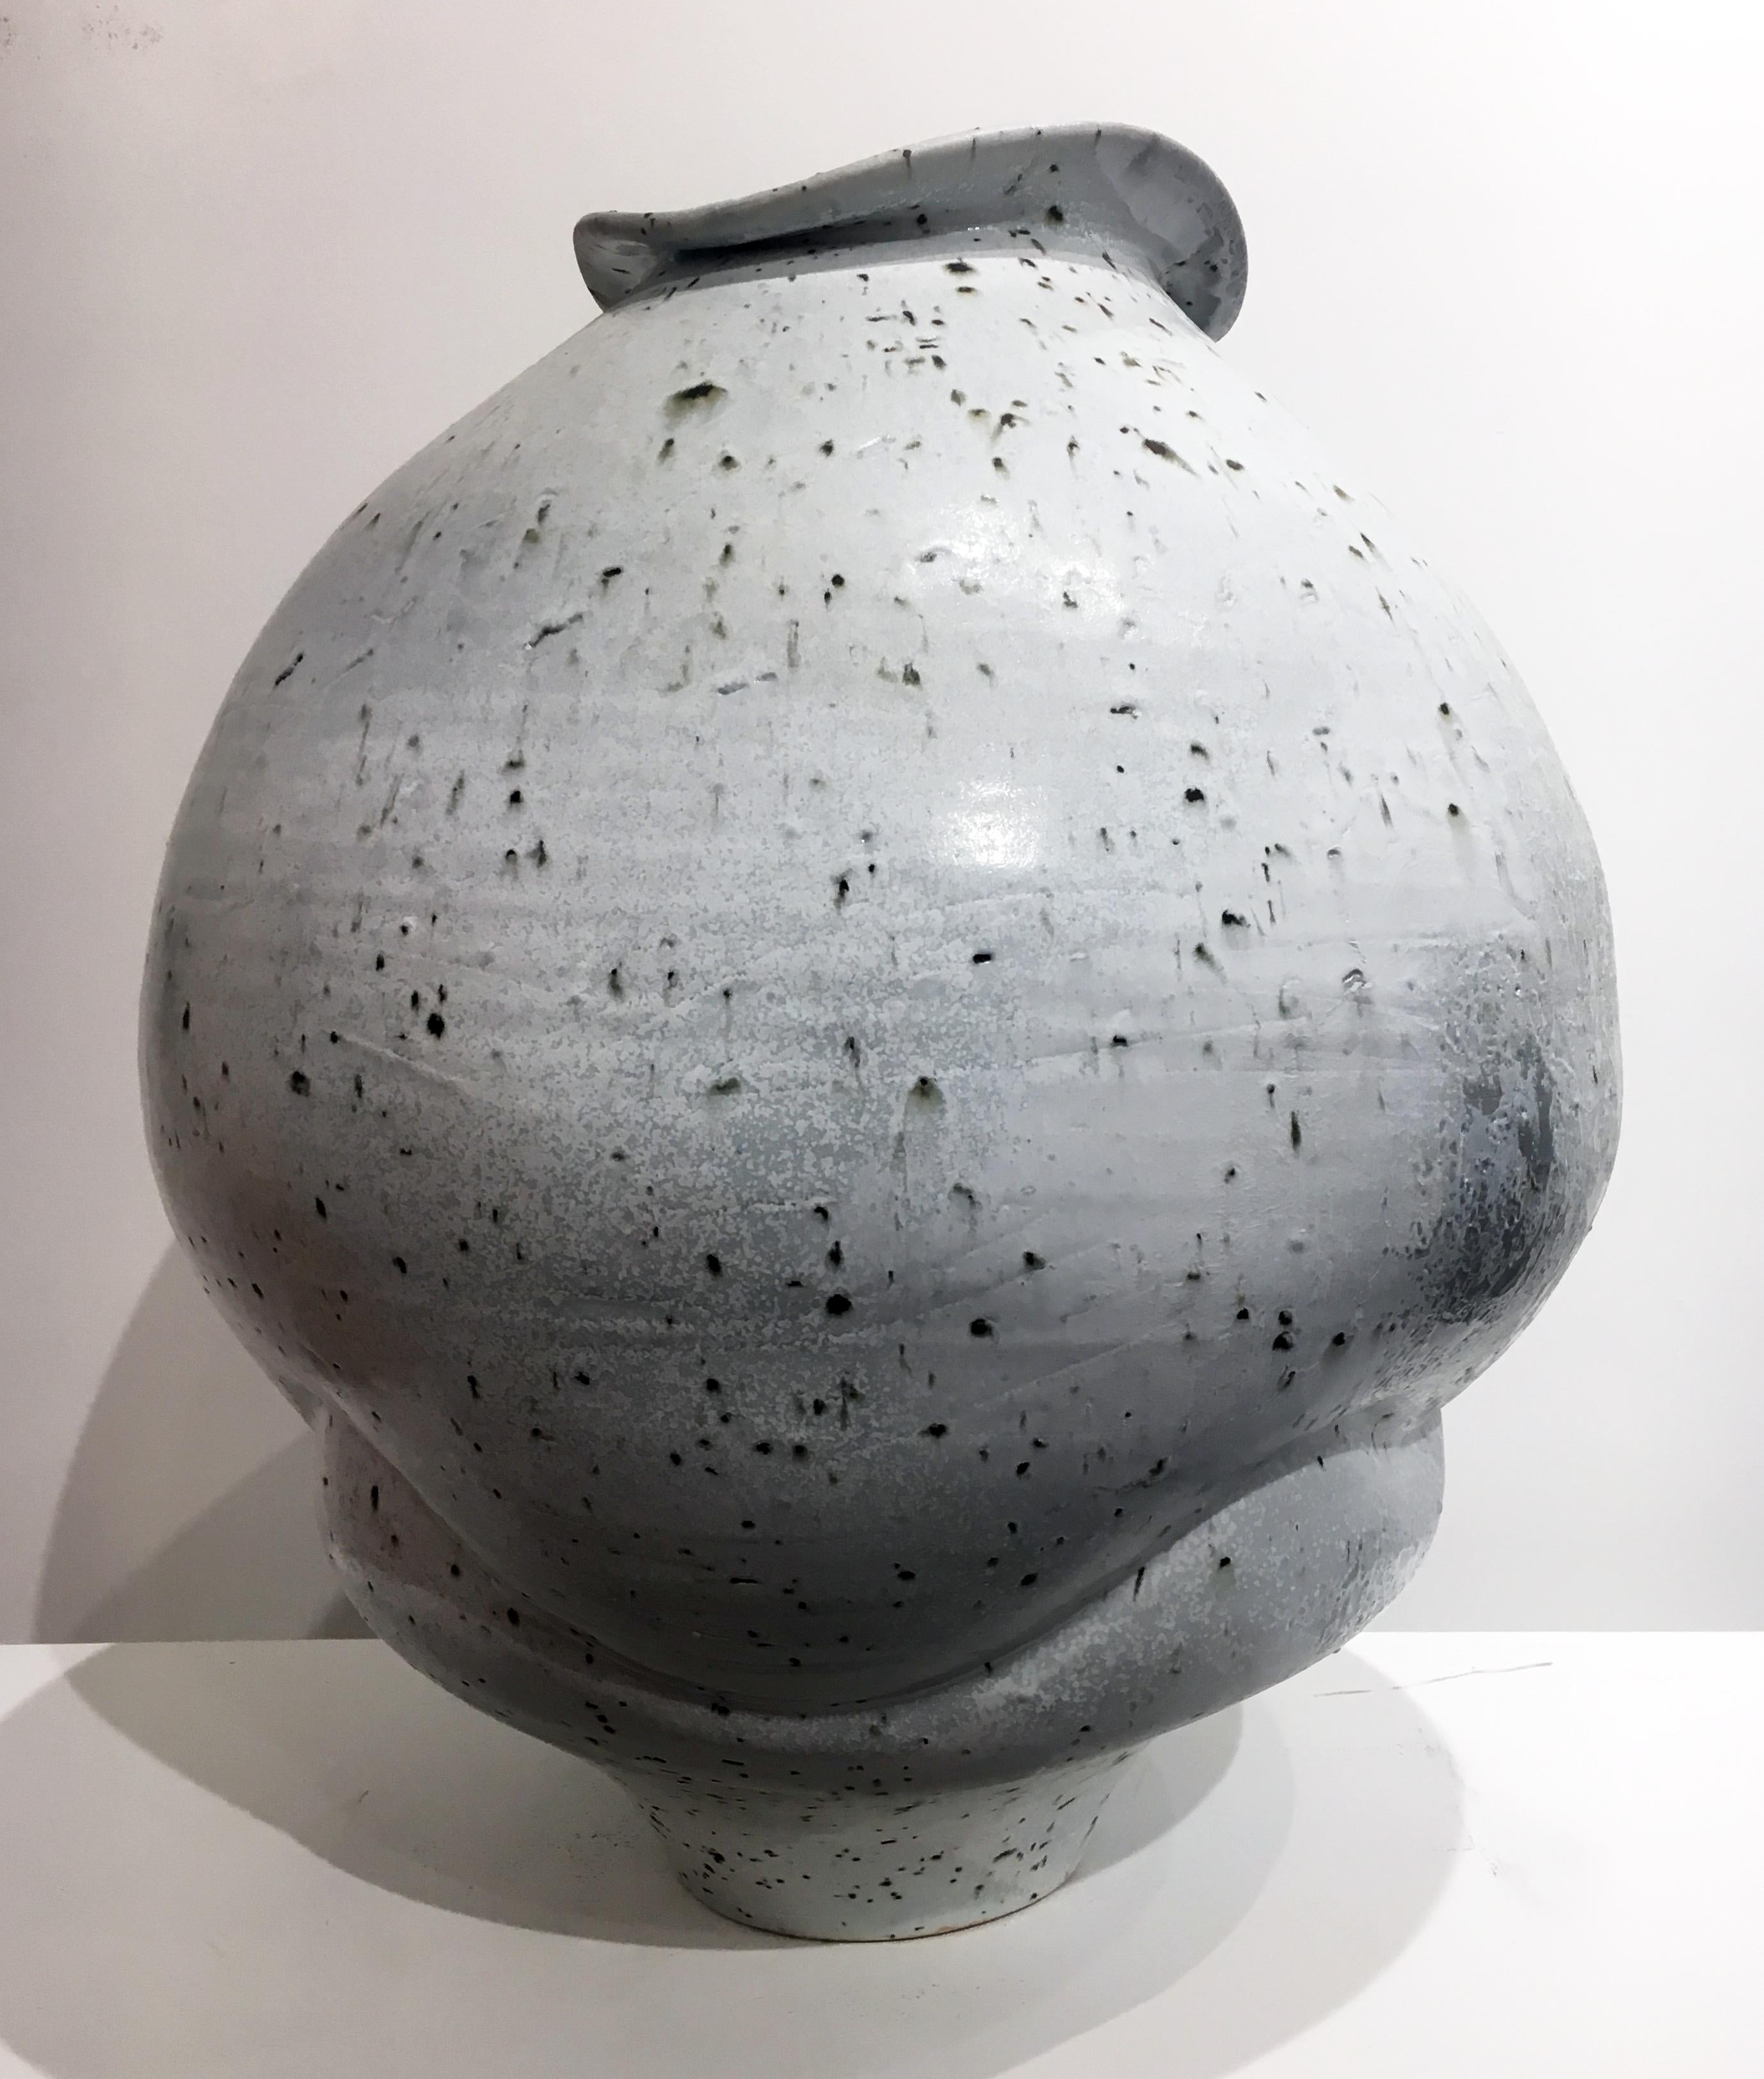 Contemporary Design, Ceramic Sculpture, Porcelain, Iron Particles, Glaze, Clay